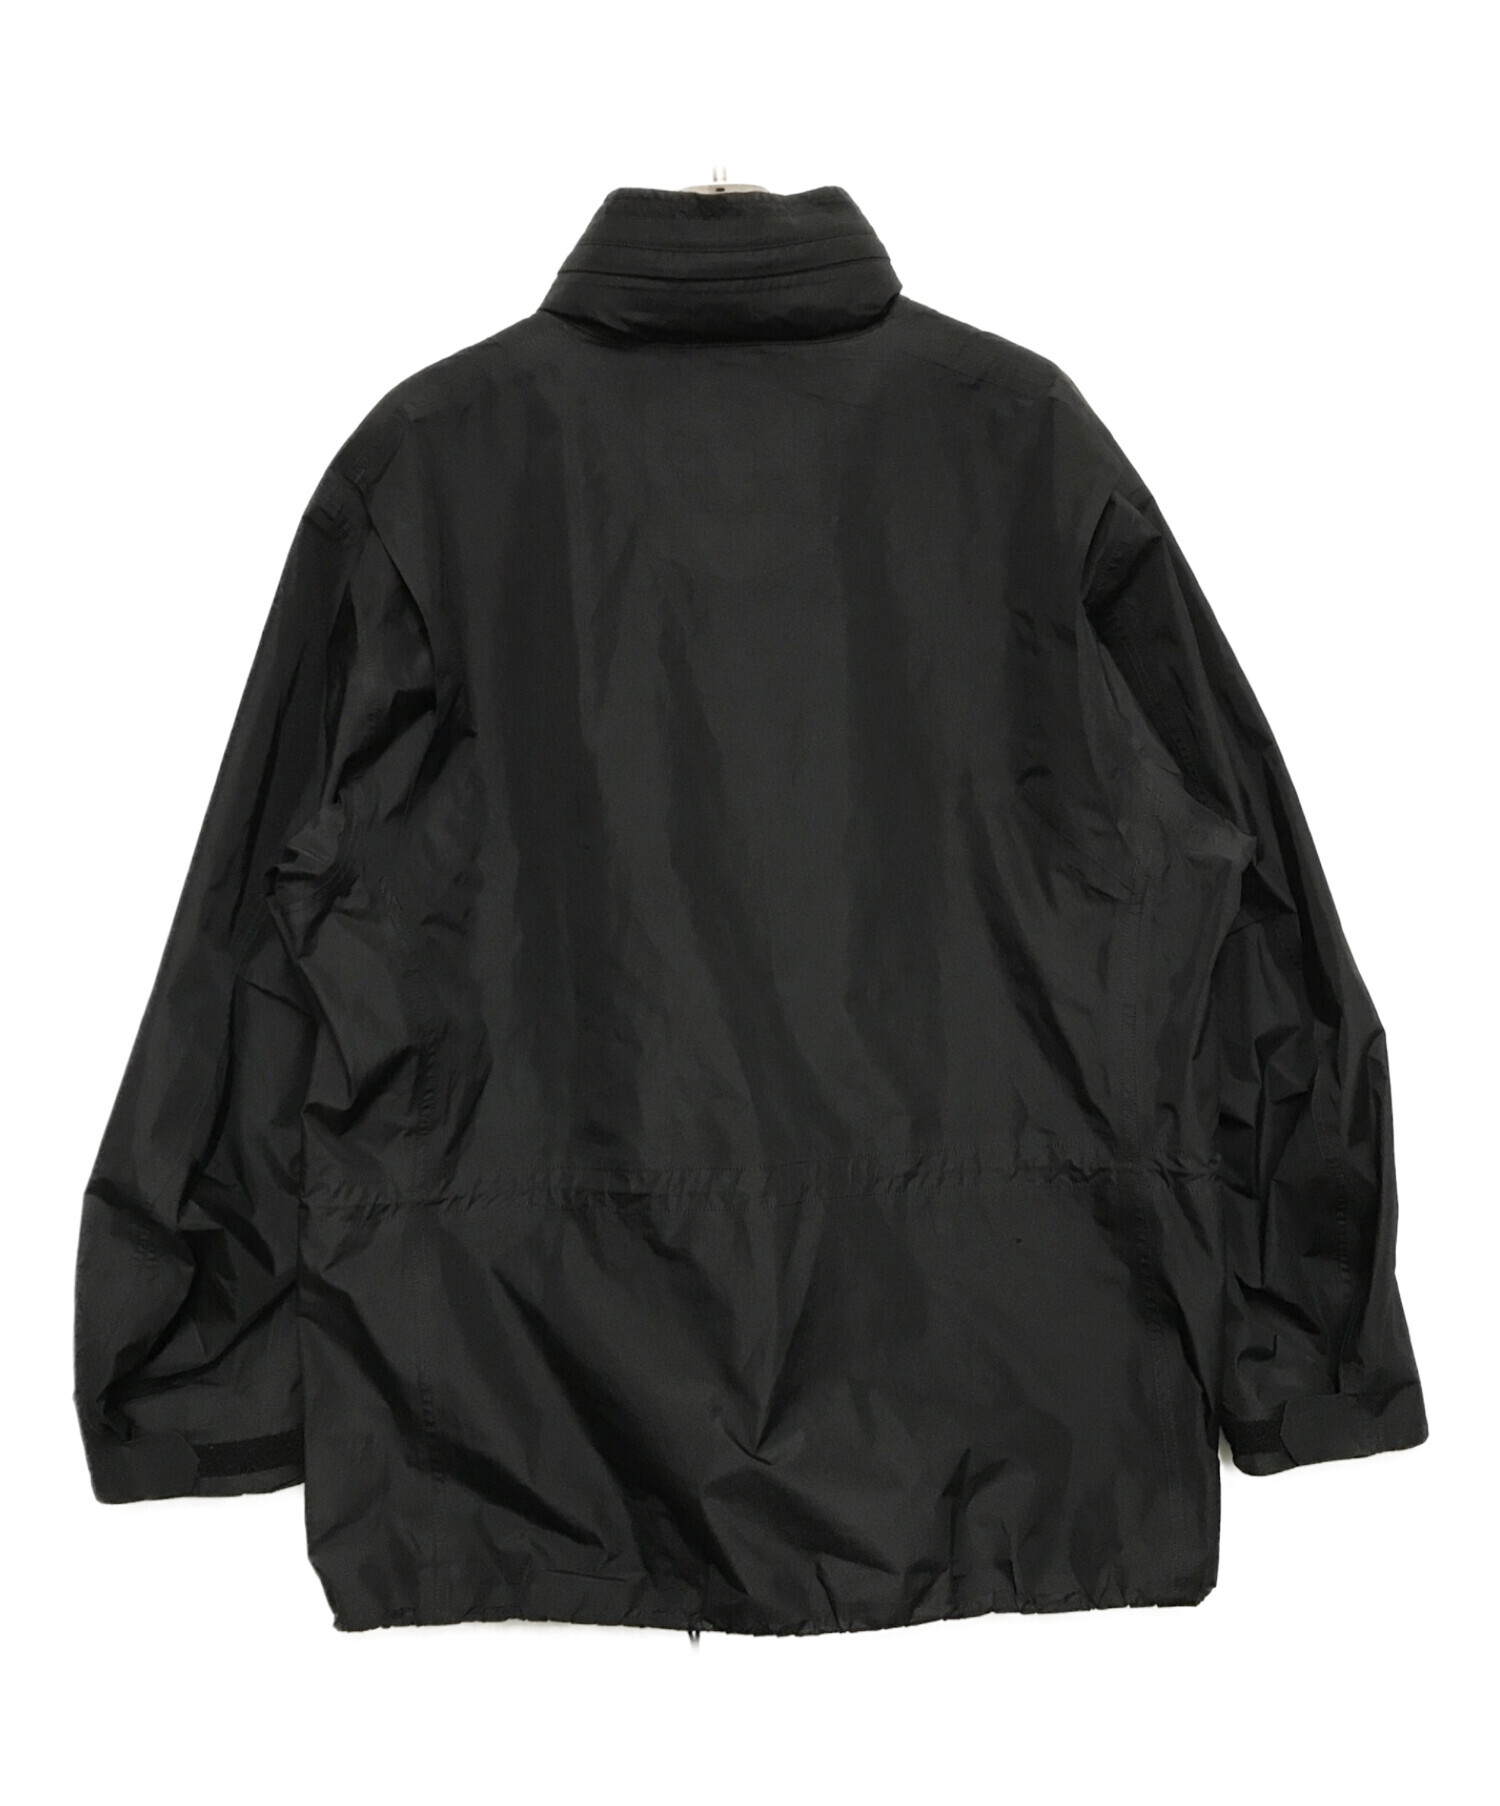 MARMOT×BEAMS (マーモット×ビームス) 別注 GORE-TEX(R) M-65 Field Jacket ブラック サイズ:L